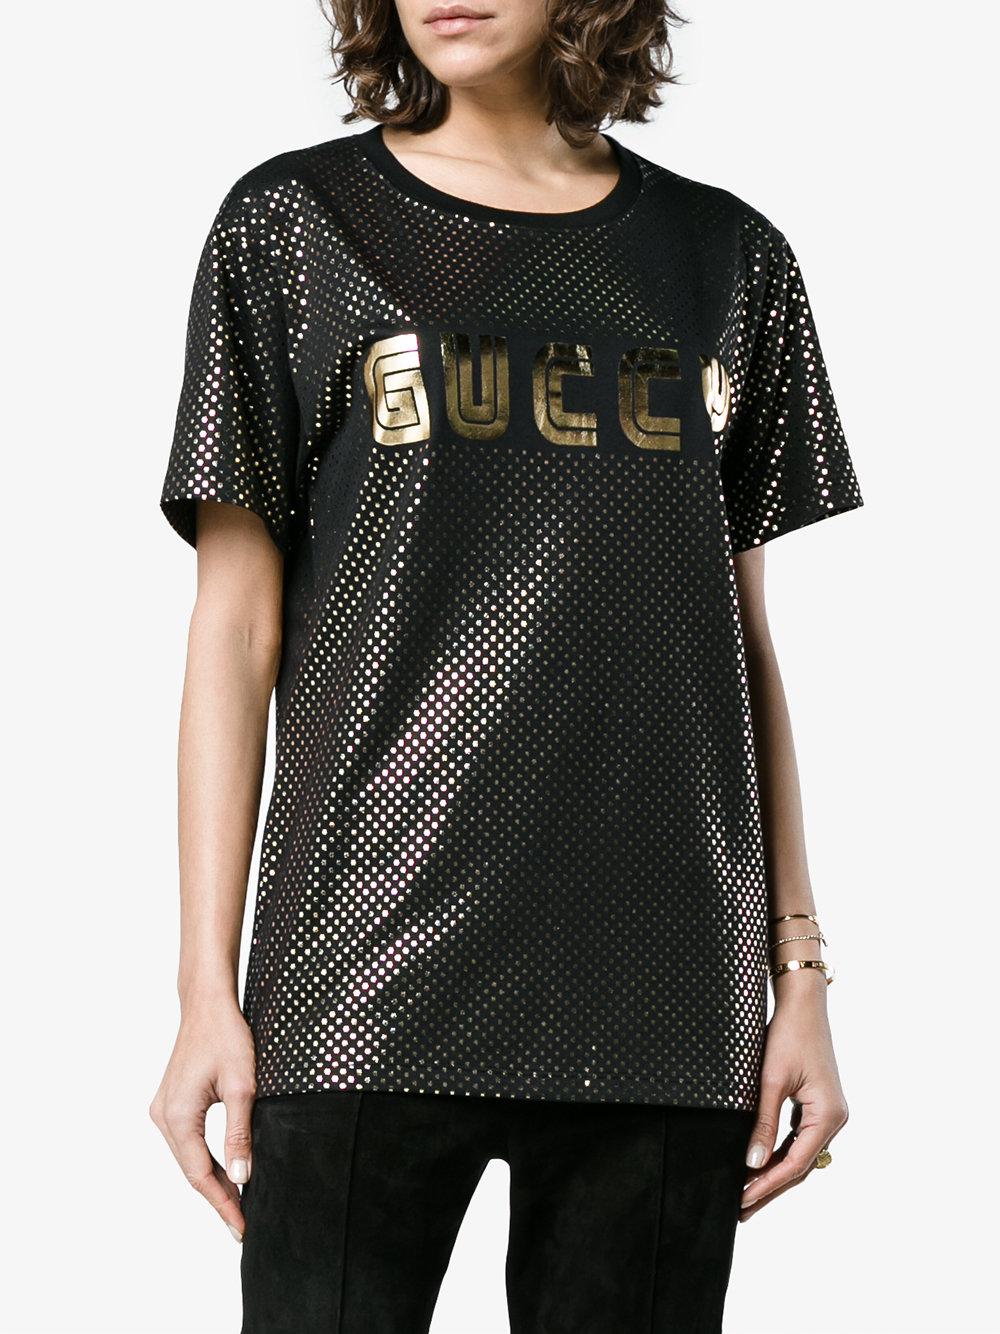 Gucci Gold Metallic Logo T-shirt in Black | Lyst